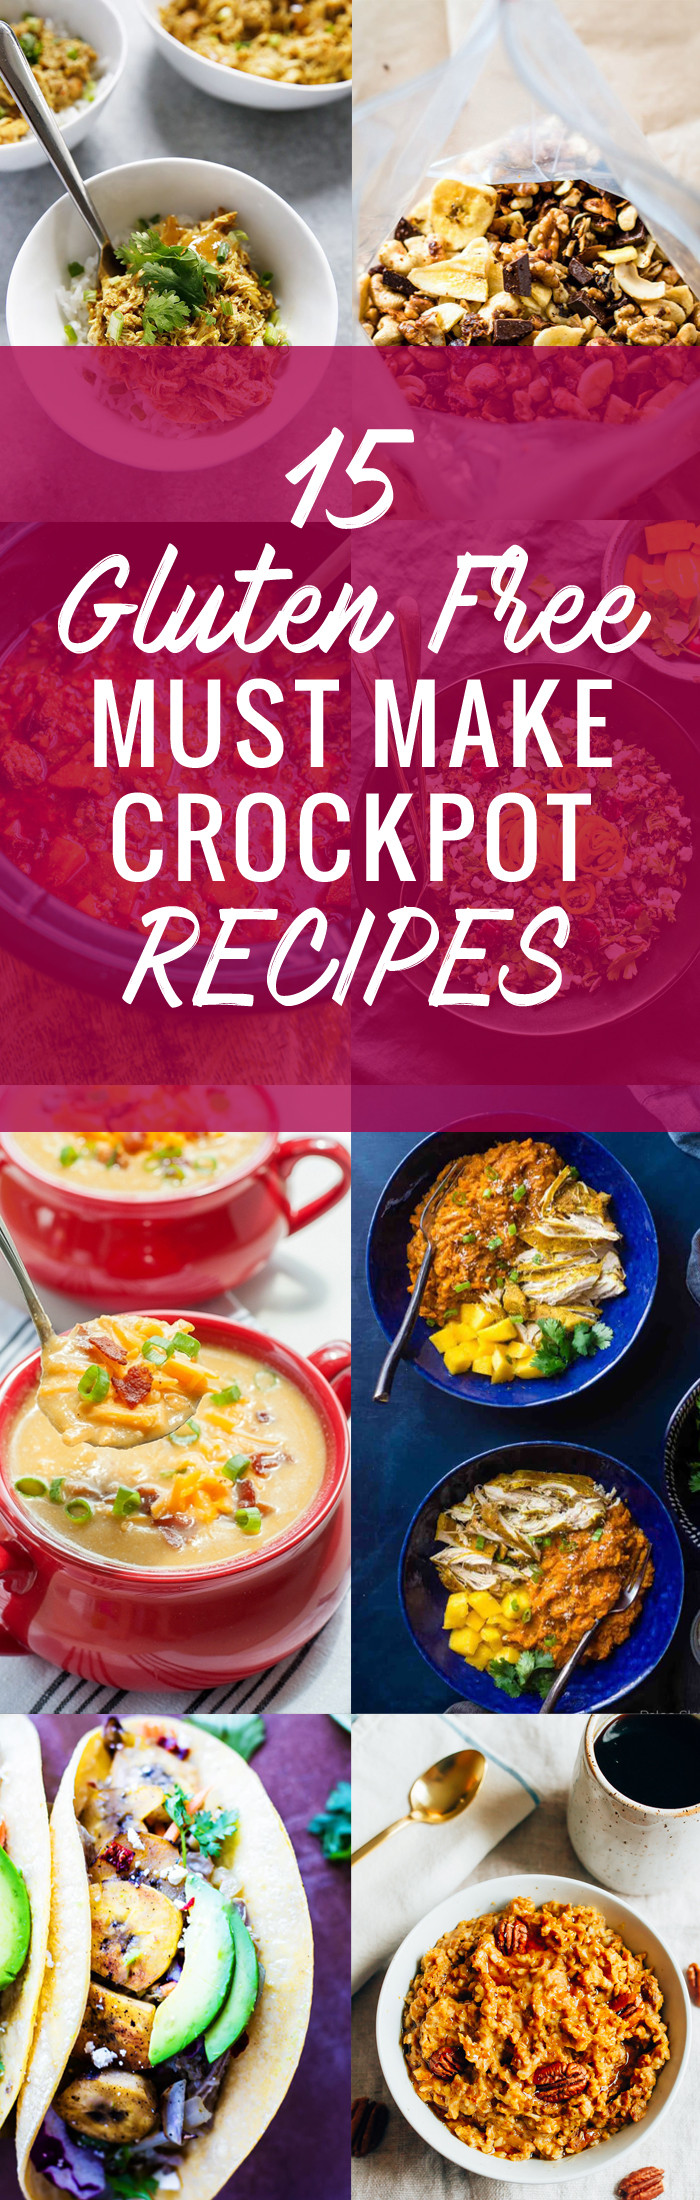 Easy Gluten Free Crockpot Recipes
 15 Gluten Free MUST MAKE Crock Pot Recipes Cotter Crunch